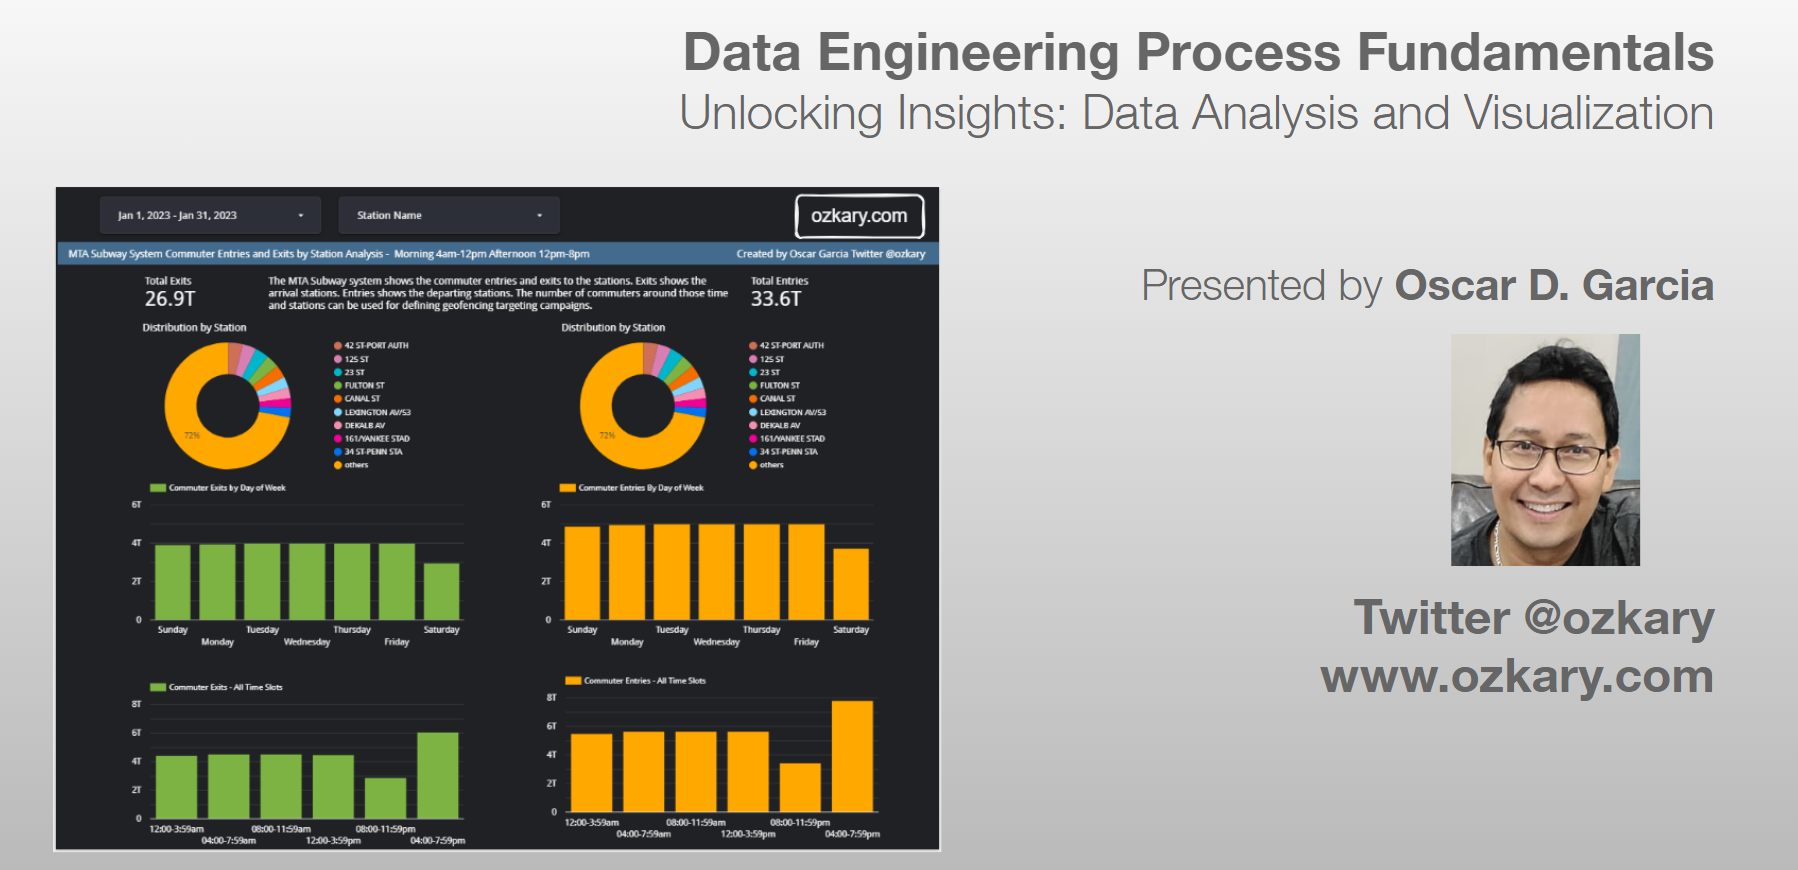 Unlocking Insights: Data Analysis and Visualization - Data Engineering Process Fundamentals